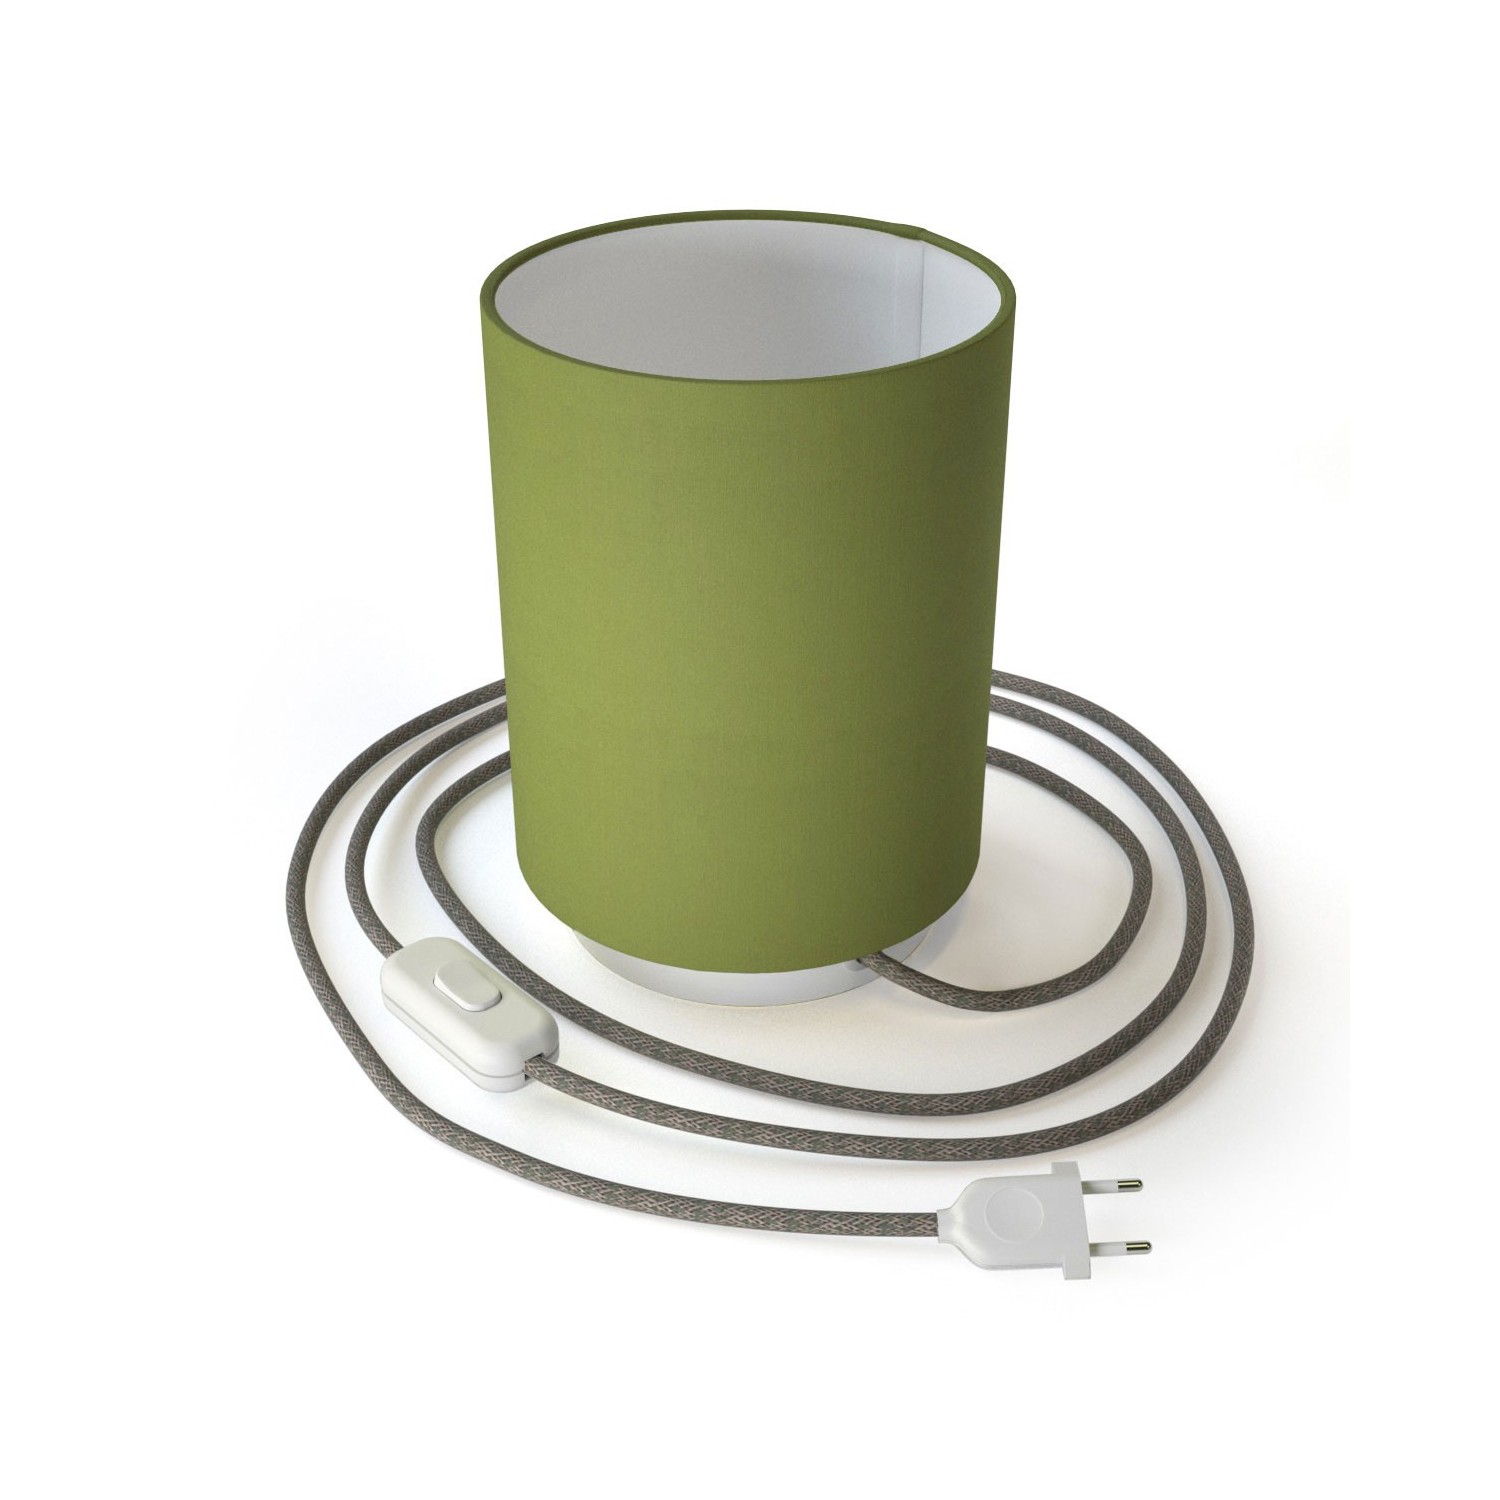 Posaluce, kovové svietidlo so zeleným plátenným valcovým tienidlom, textilným káblom, in-line vypínačom a 2-pólovou zástrčkou